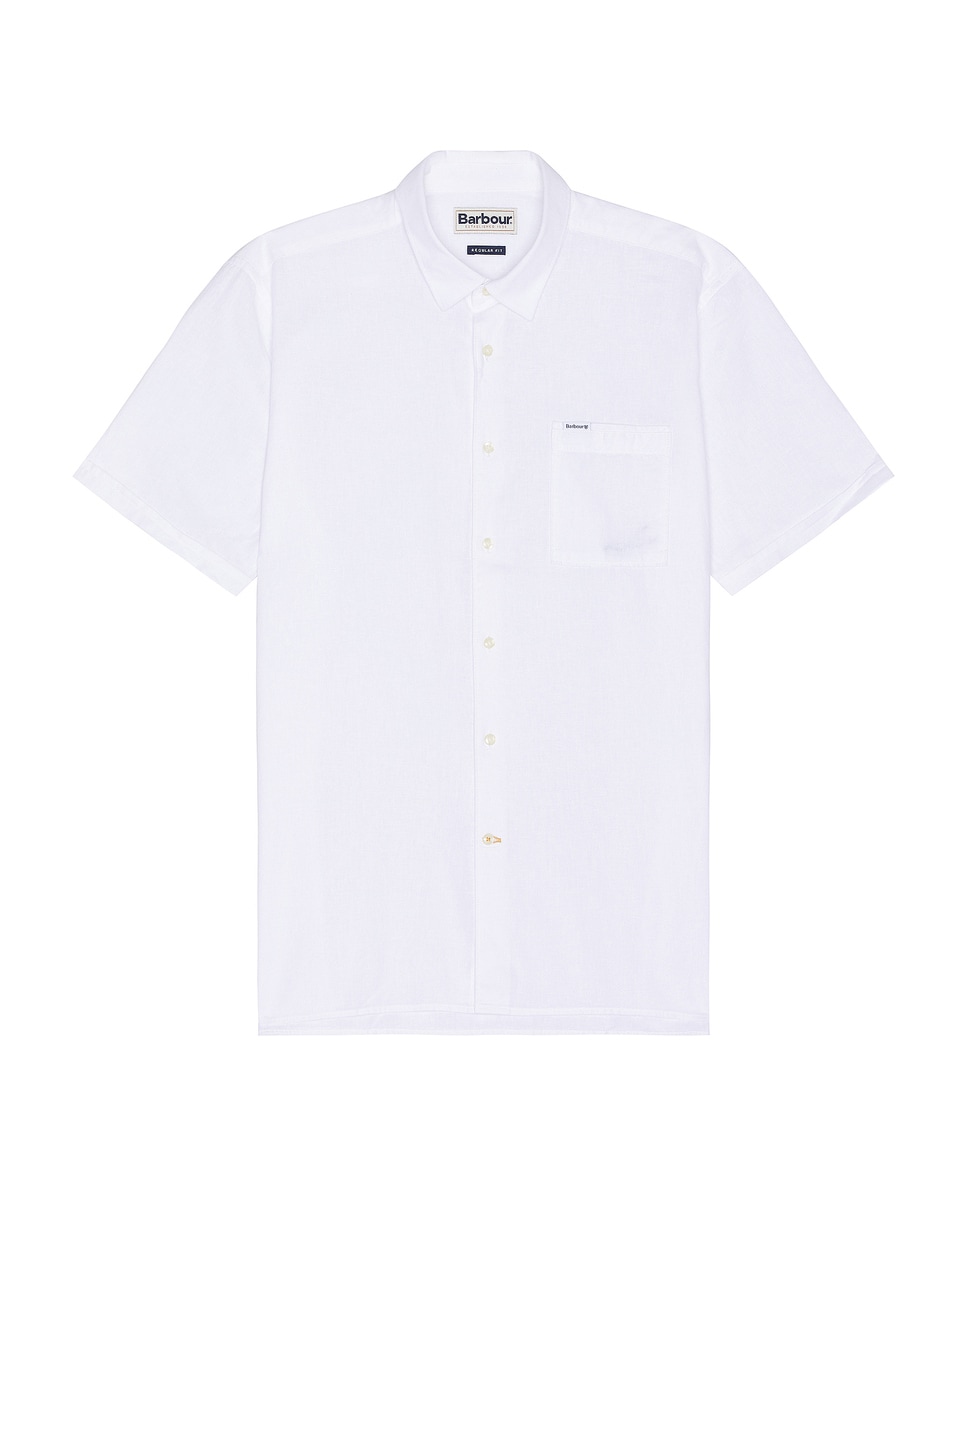 Image 1 of Barbour Nelson Short Sleeve Summer Shirt in White